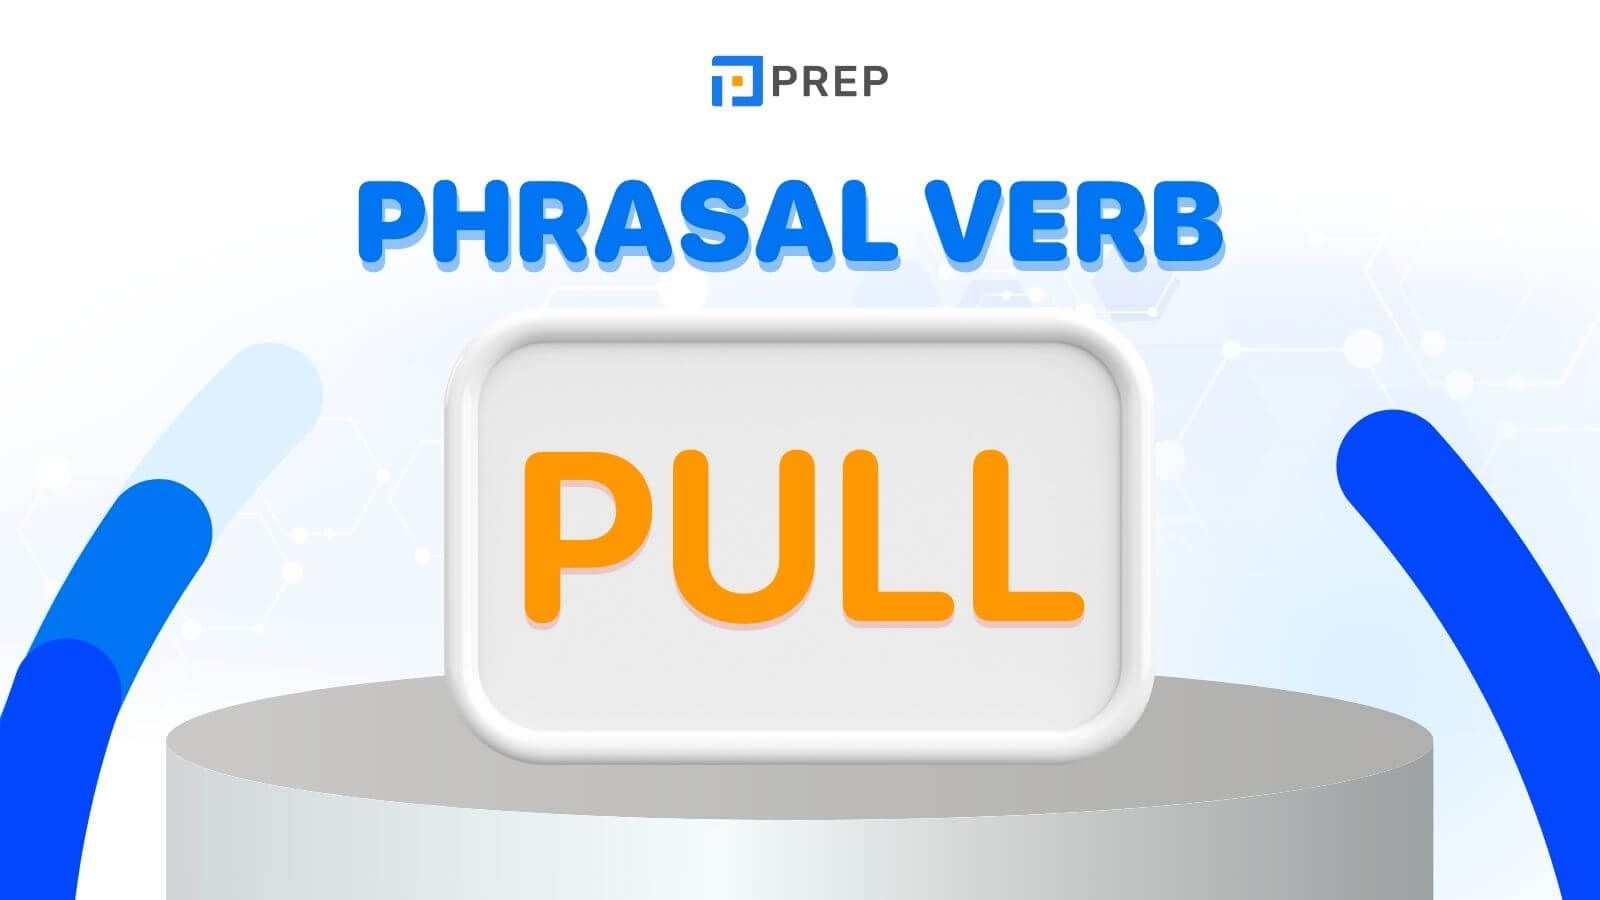 phrasal-verb-voi-pull.jpg